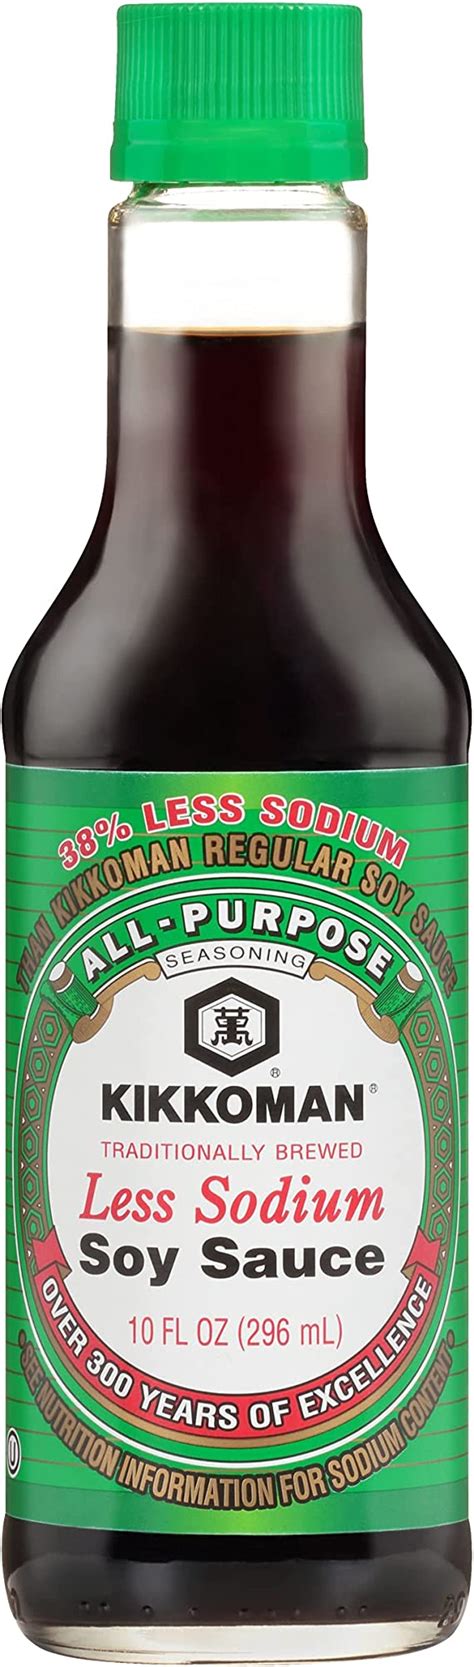 Kikkoman Less Sodium Soy Sauce All Purpose Seasoning Traditionally